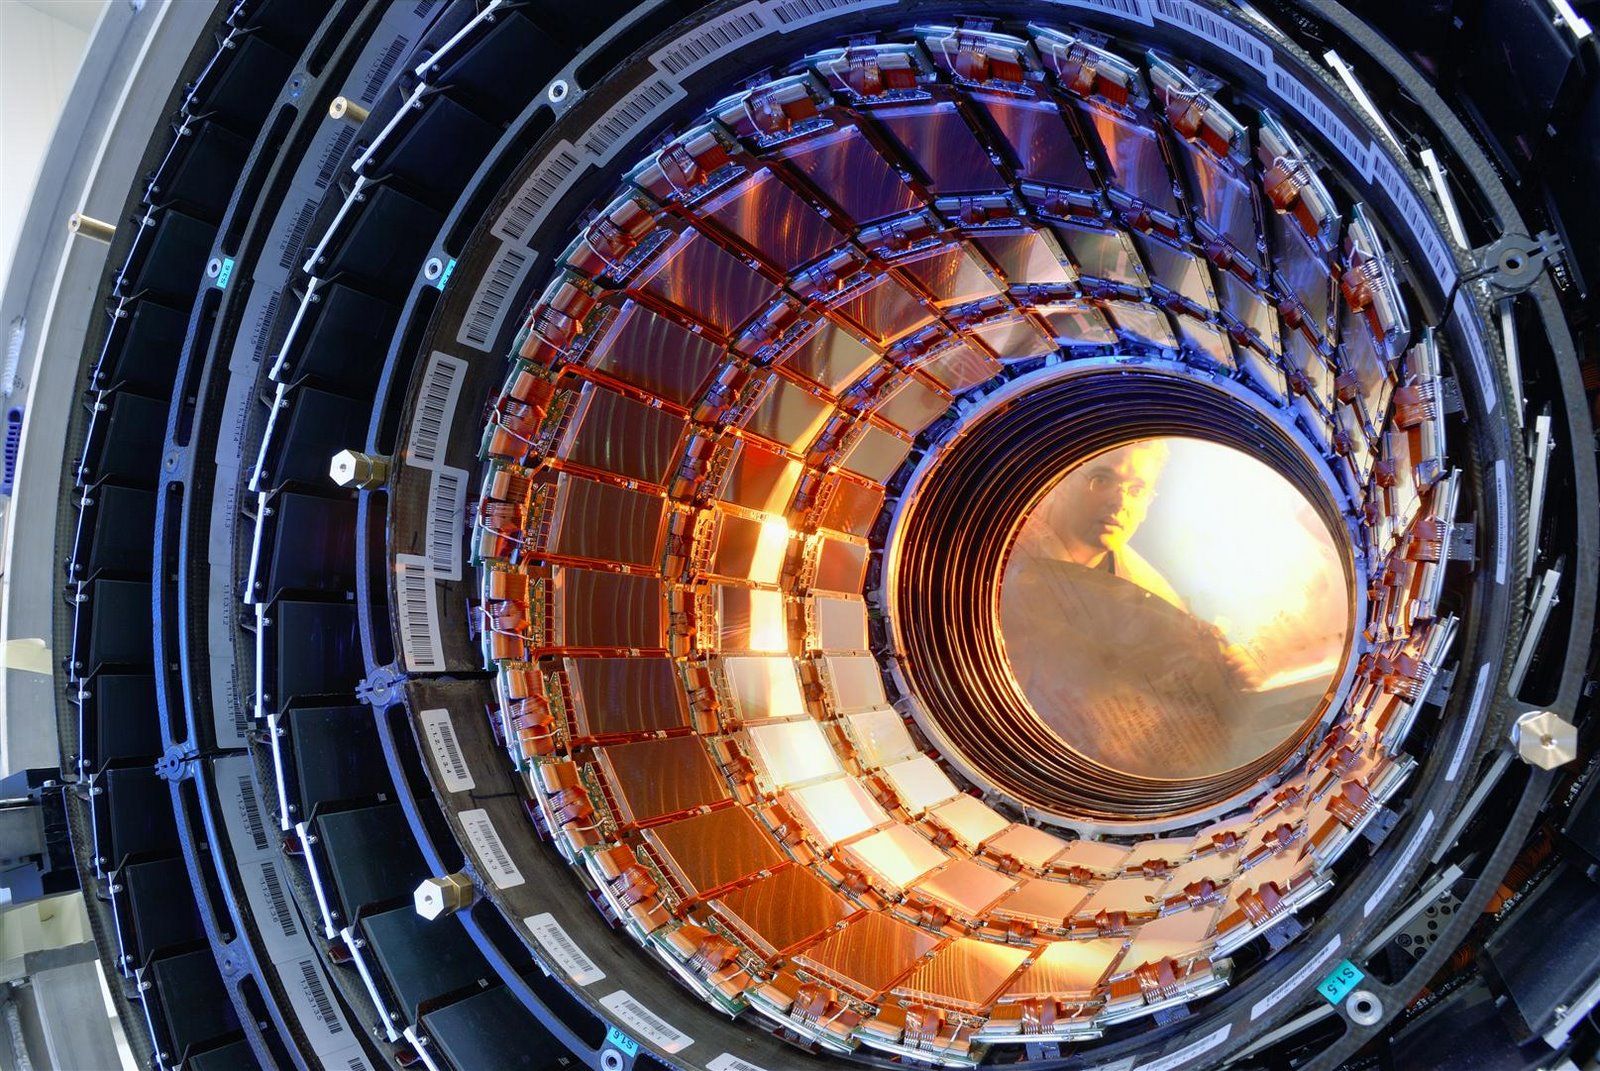 Large Hadron Collider Backgrounds, Compatible - PC, Mobile, Gadgets| 1600x1071 px